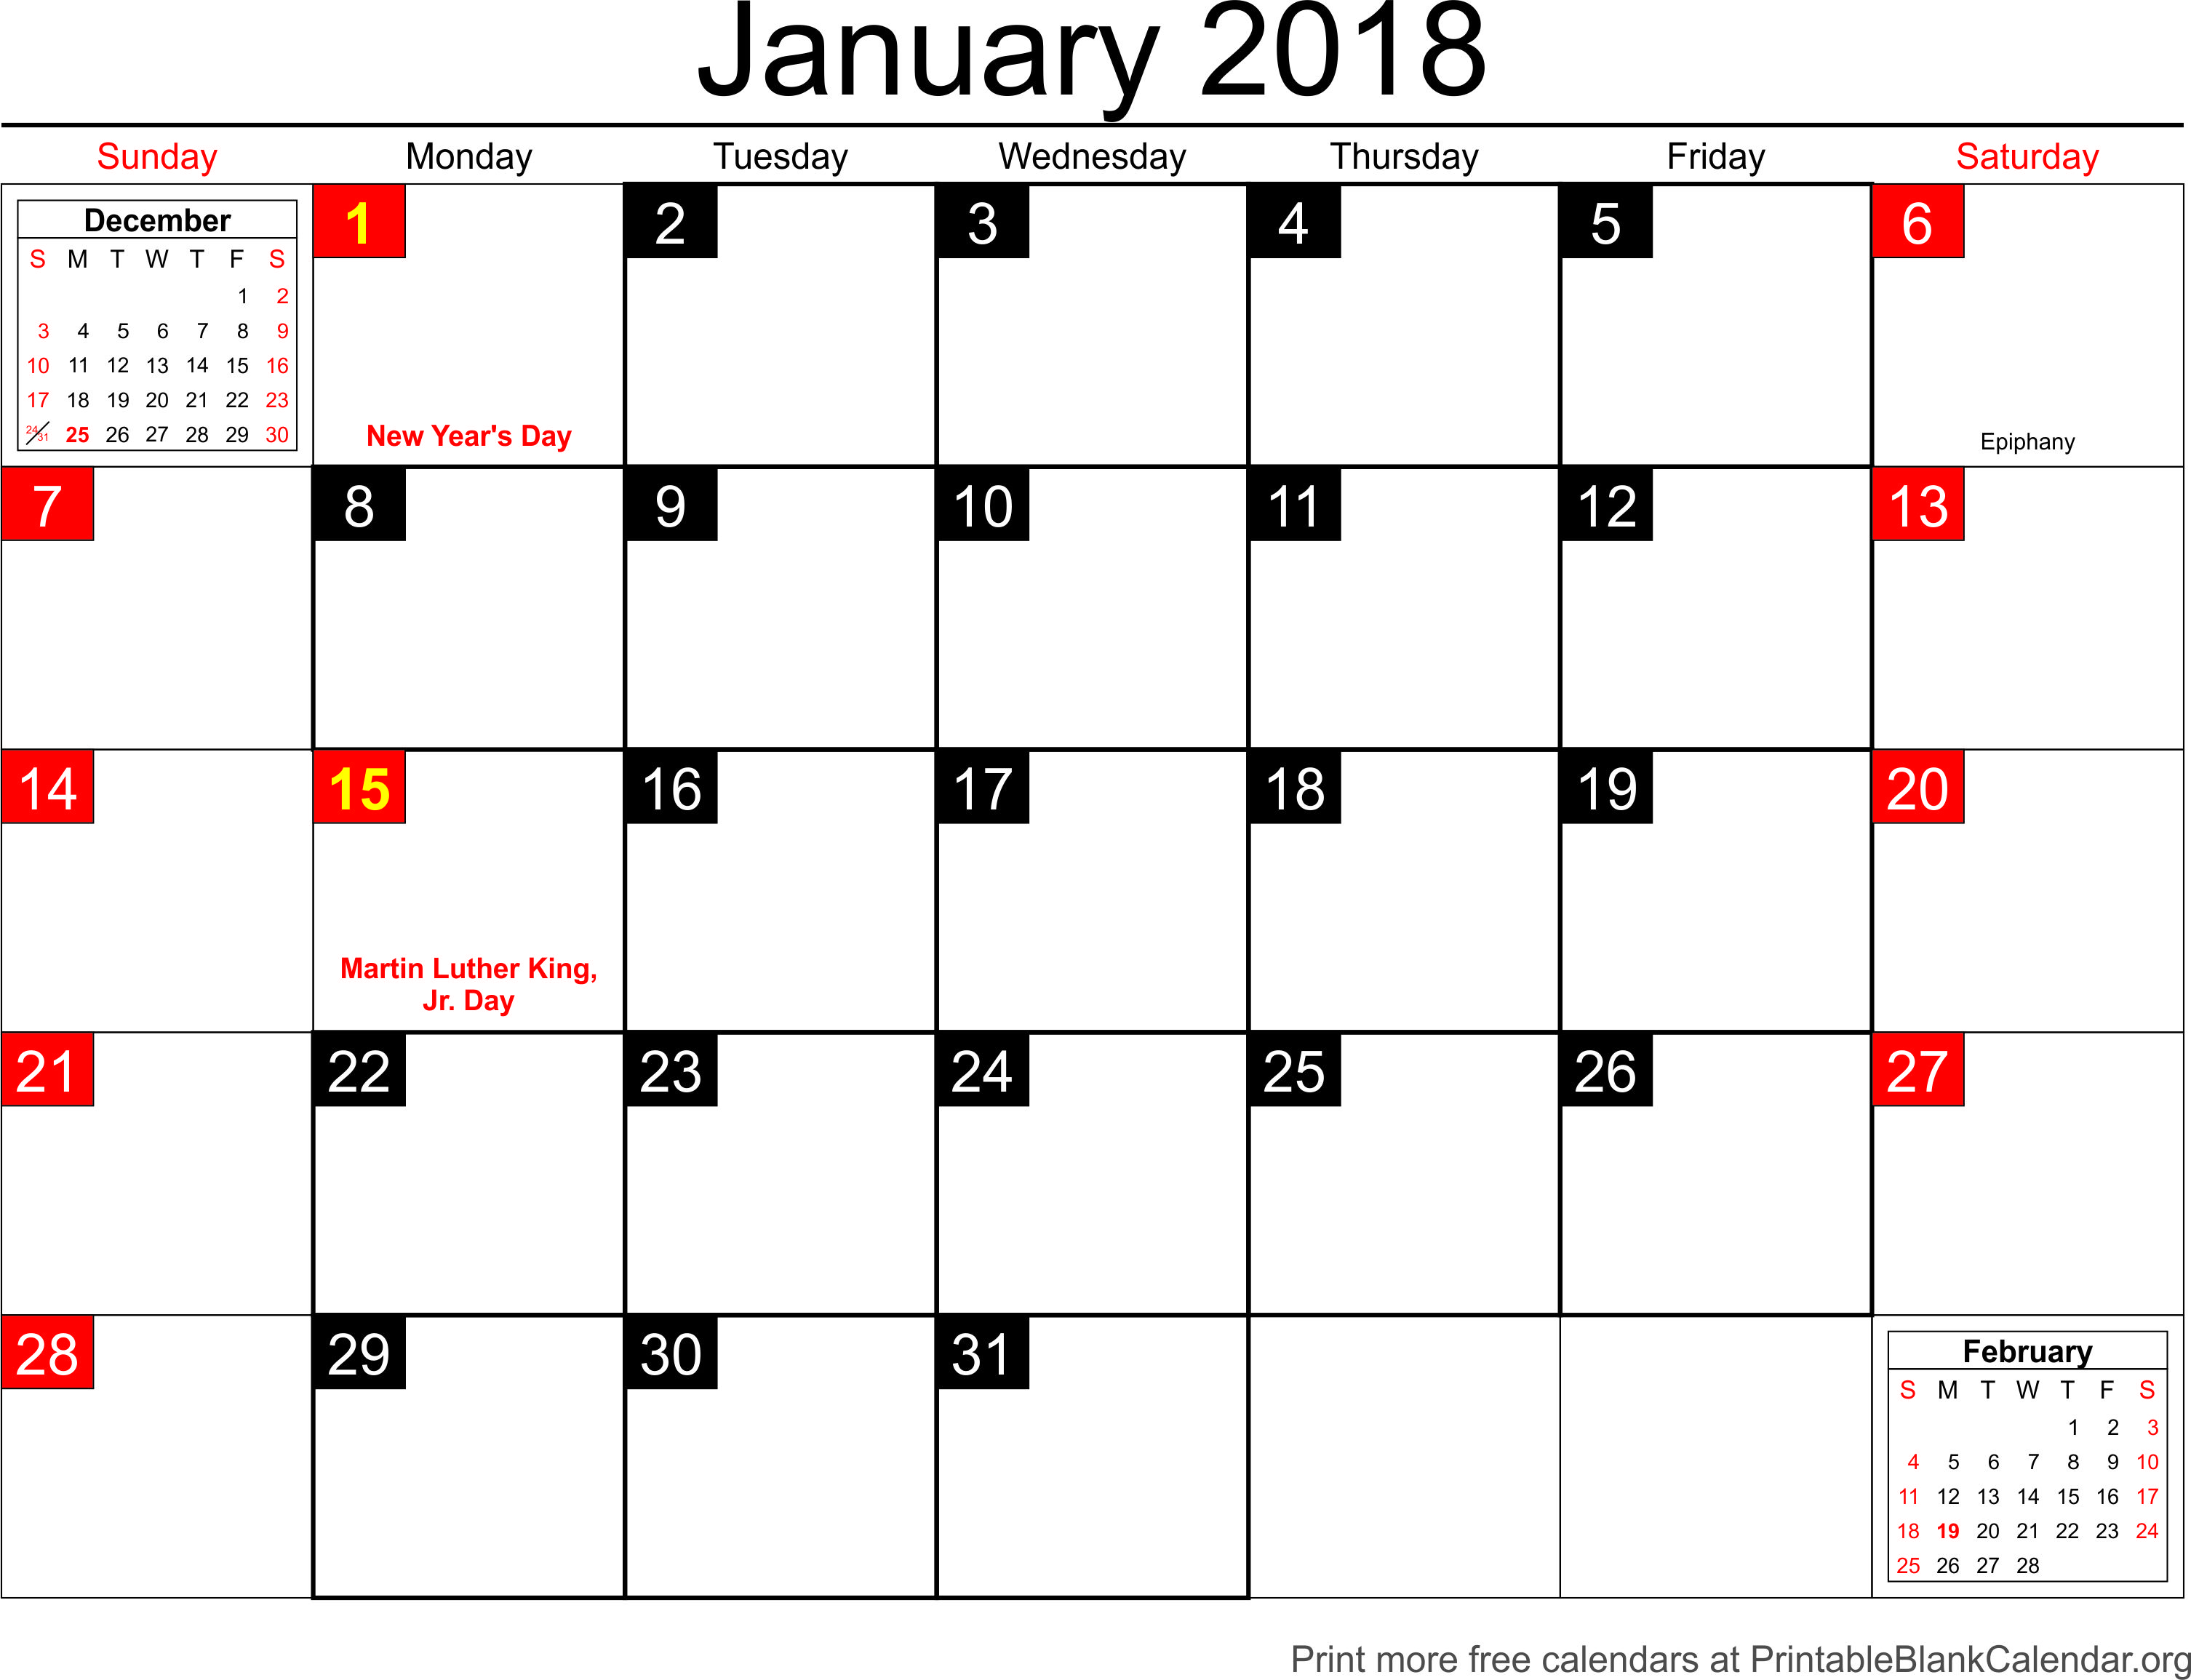 January Chart 2018